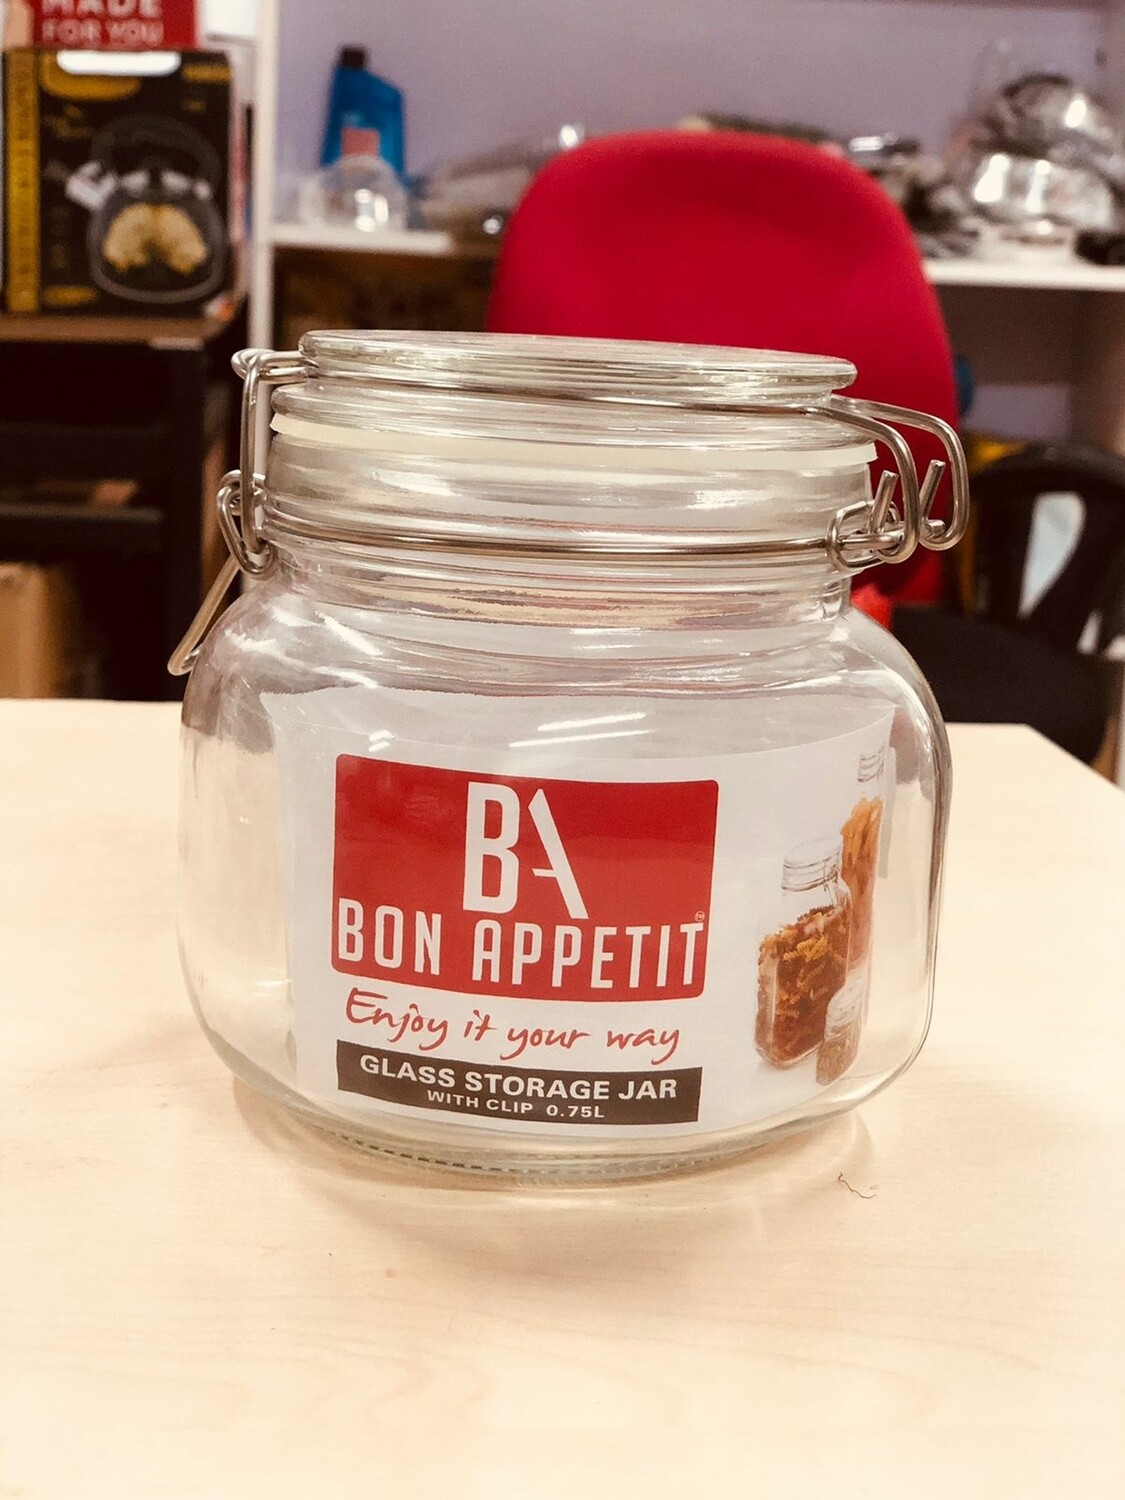 Bon Appetit Glass Clip Jar 0.75L with Clip lock Allows jar to stay airtight